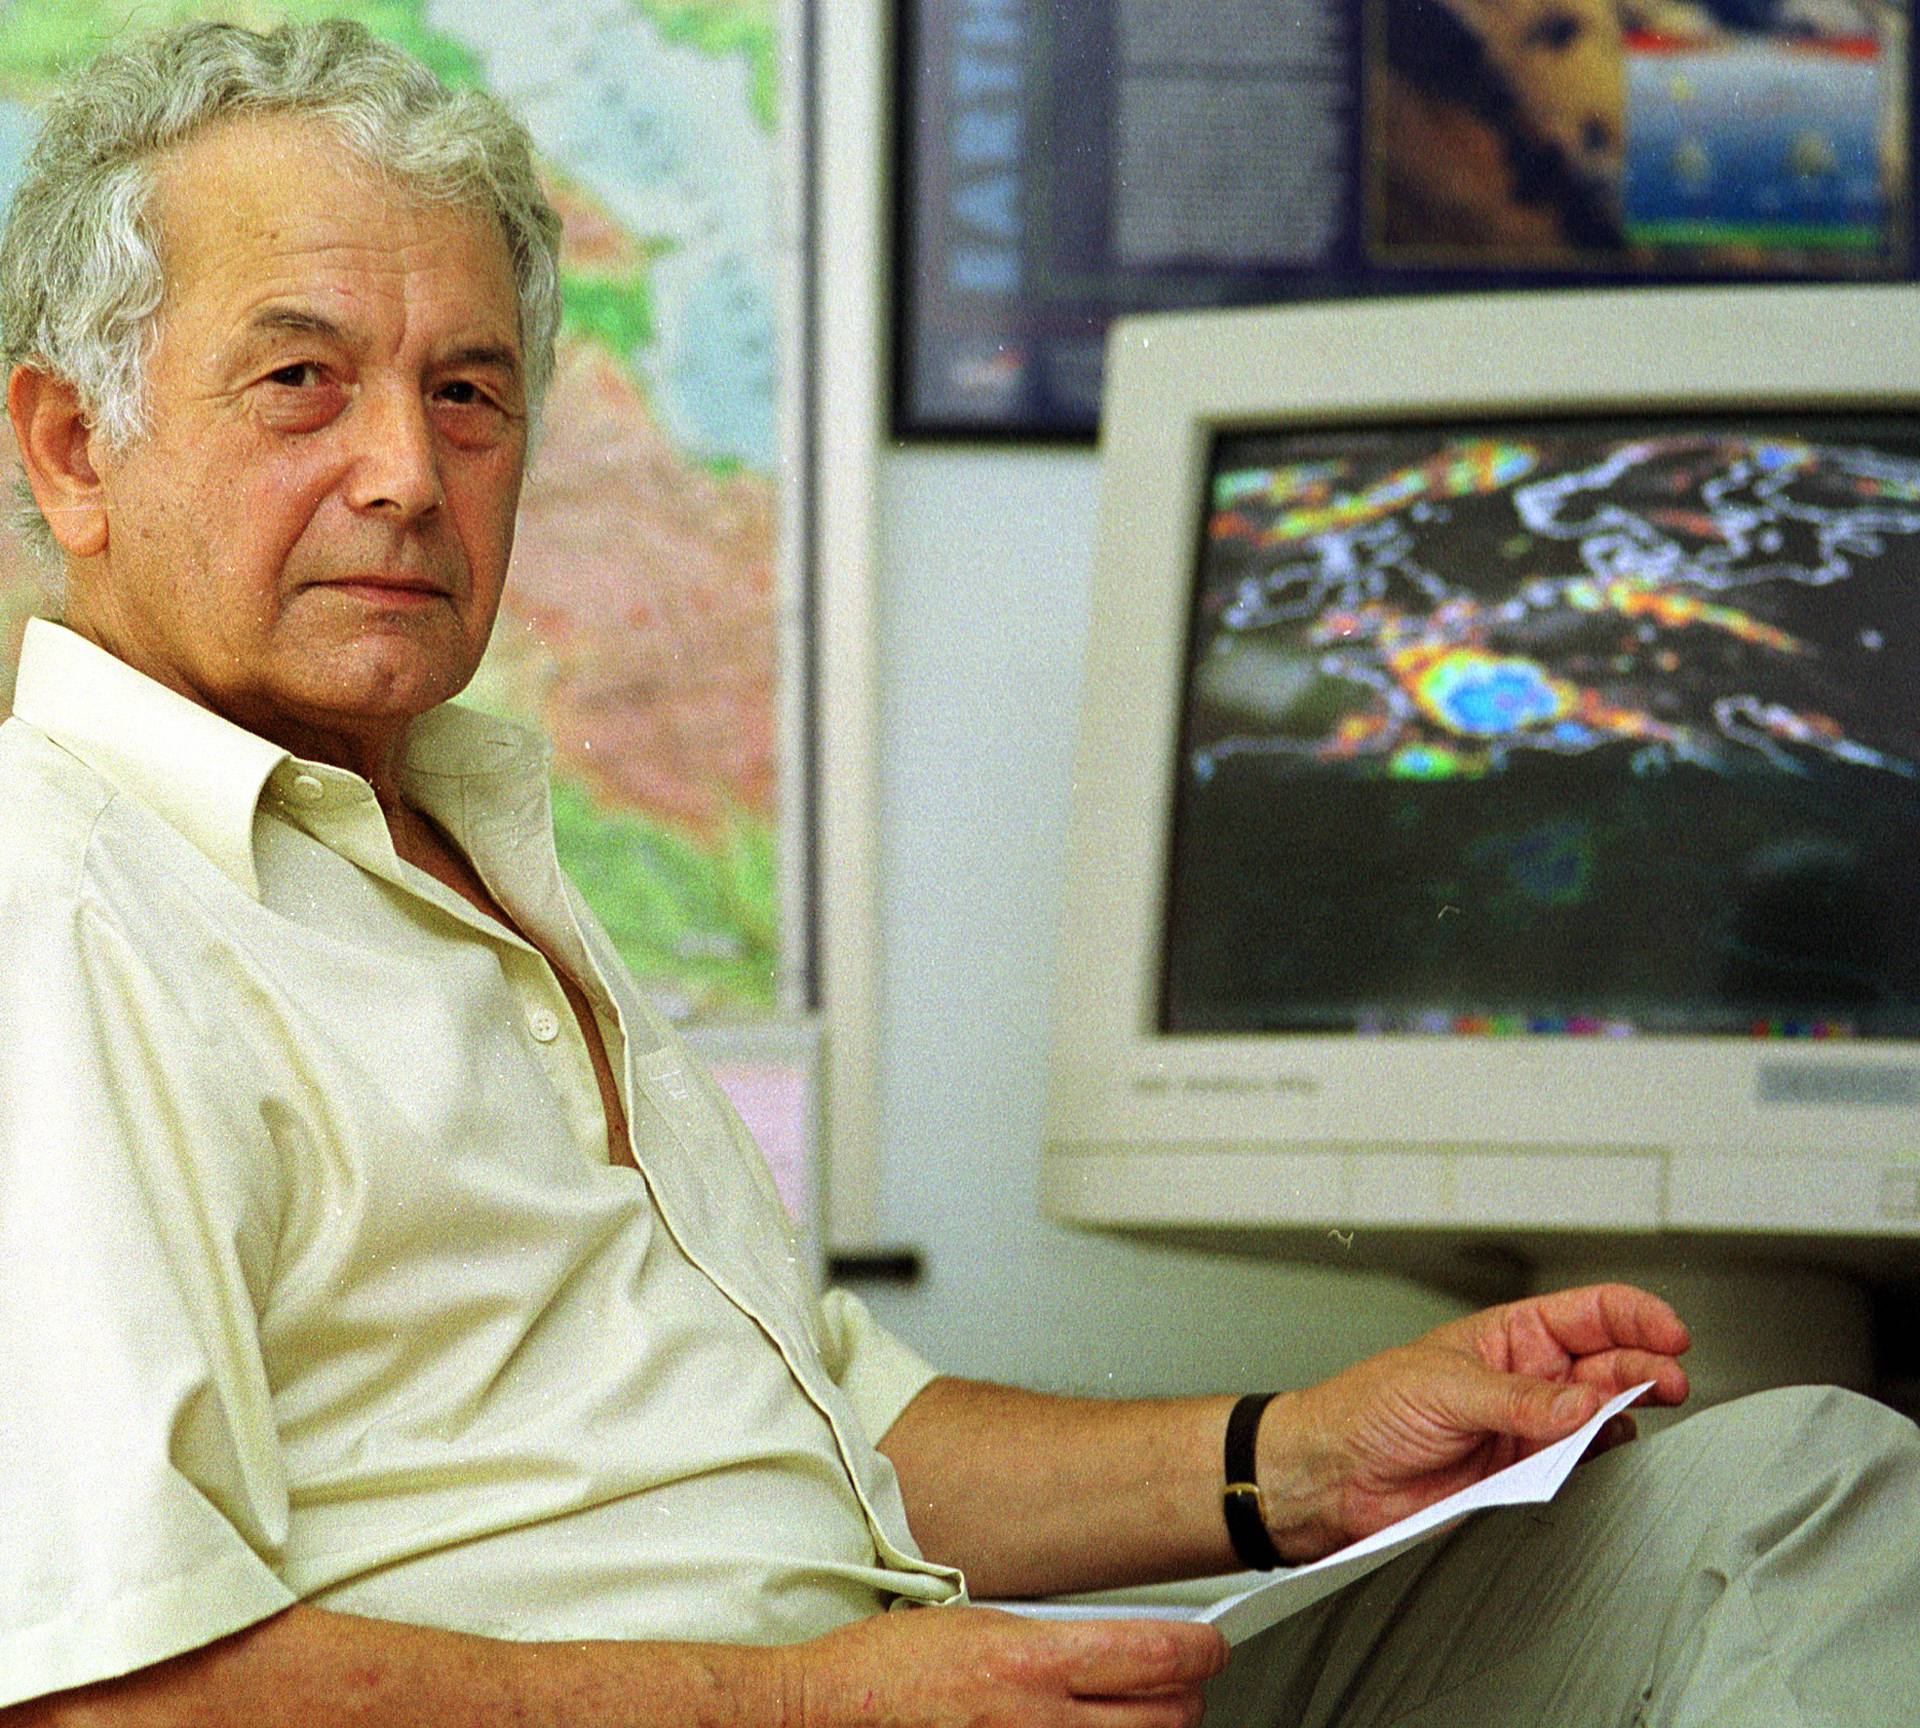 Preminuo veliki meteorolog Milan Sijerković u 84. godini...